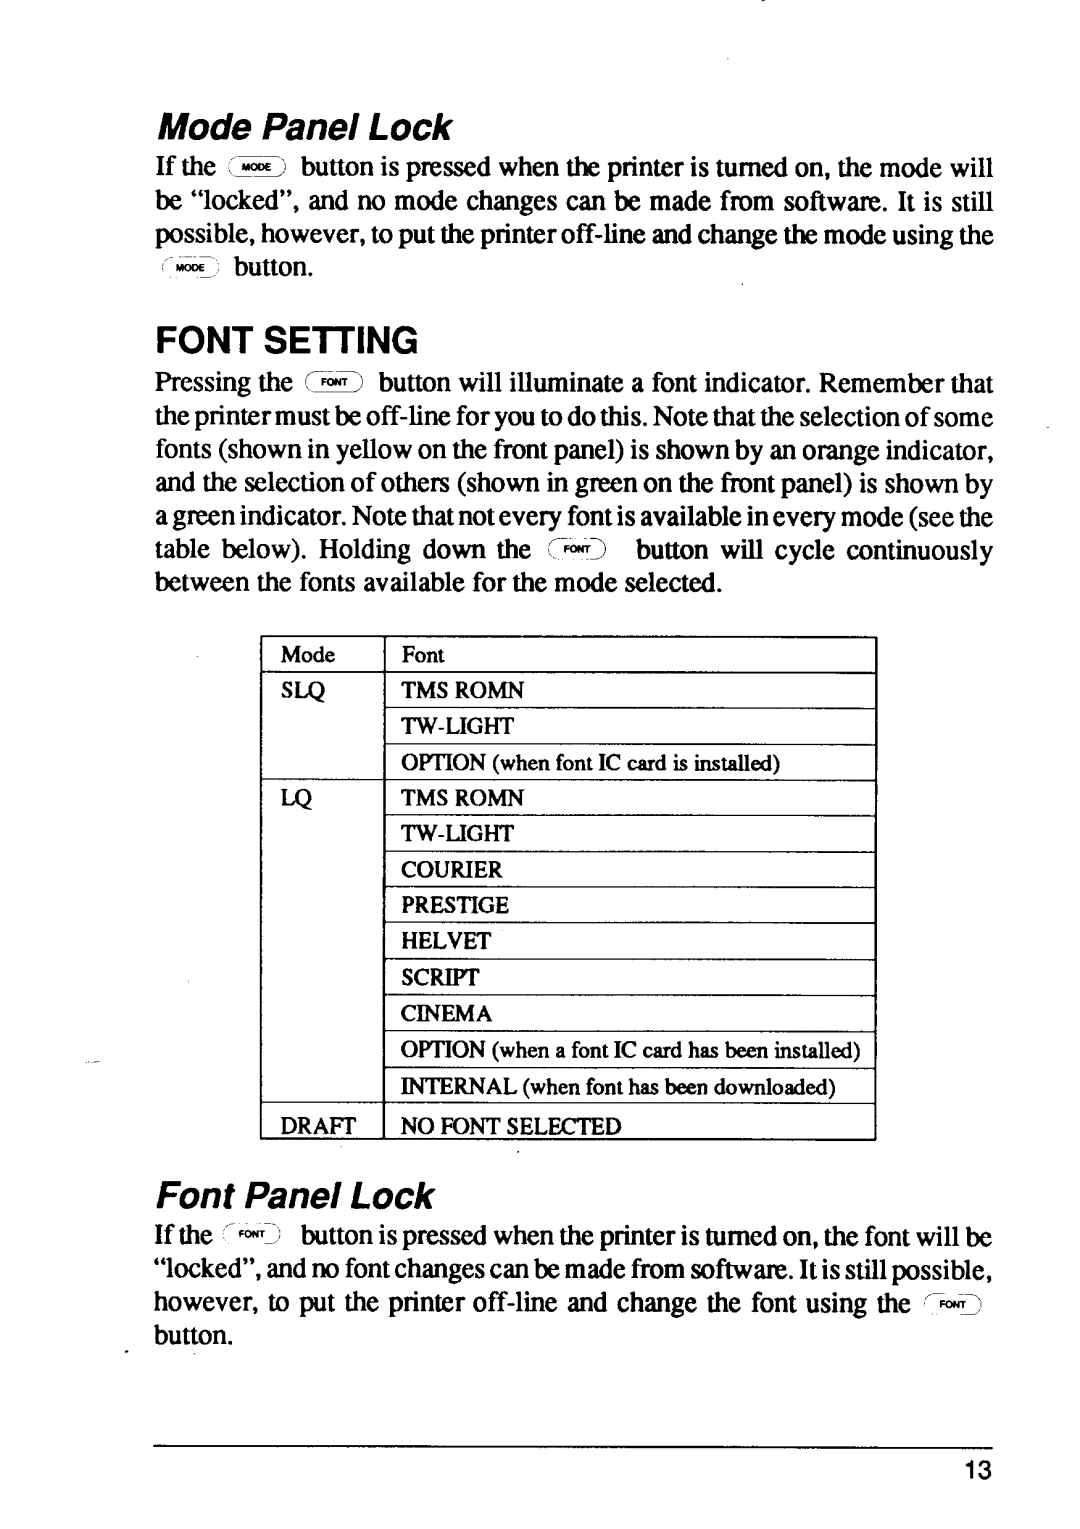 Star Micronics XB24-15, XB24-10 user manual Mode Panel Lock, Font Panel Lock, Font Setting 